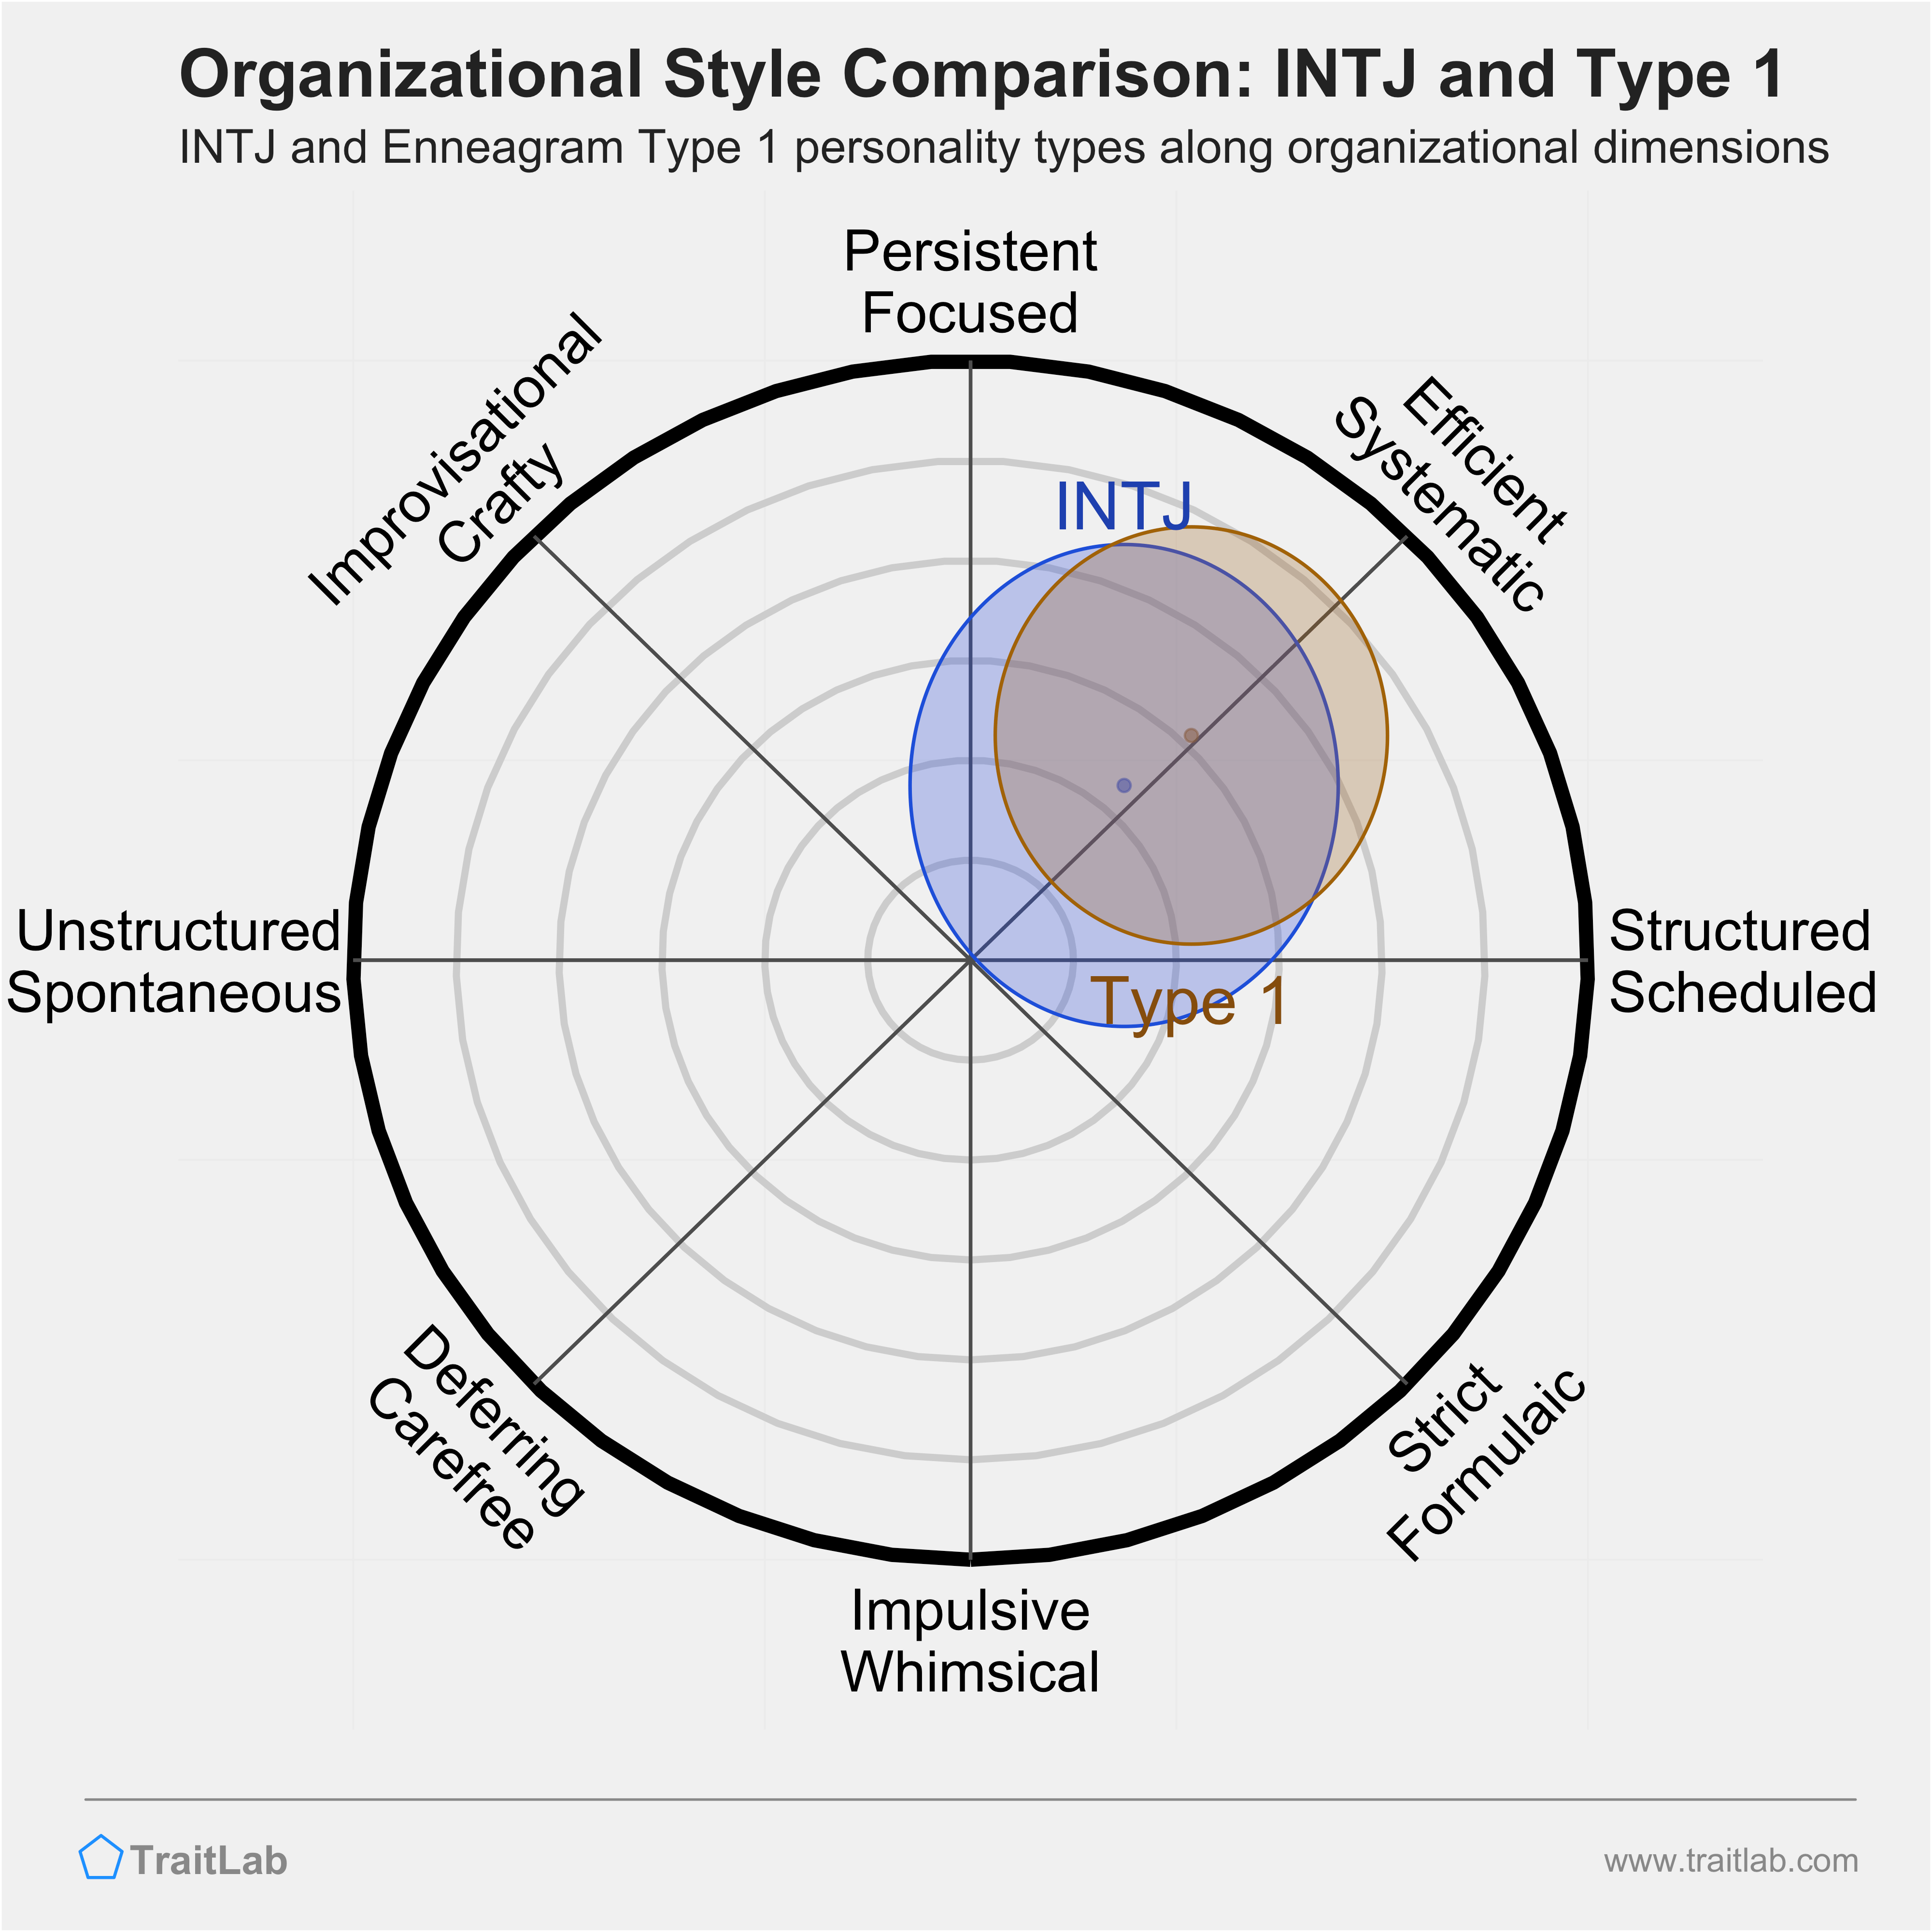 INTJ and Type 1 comparison across organizational dimensions